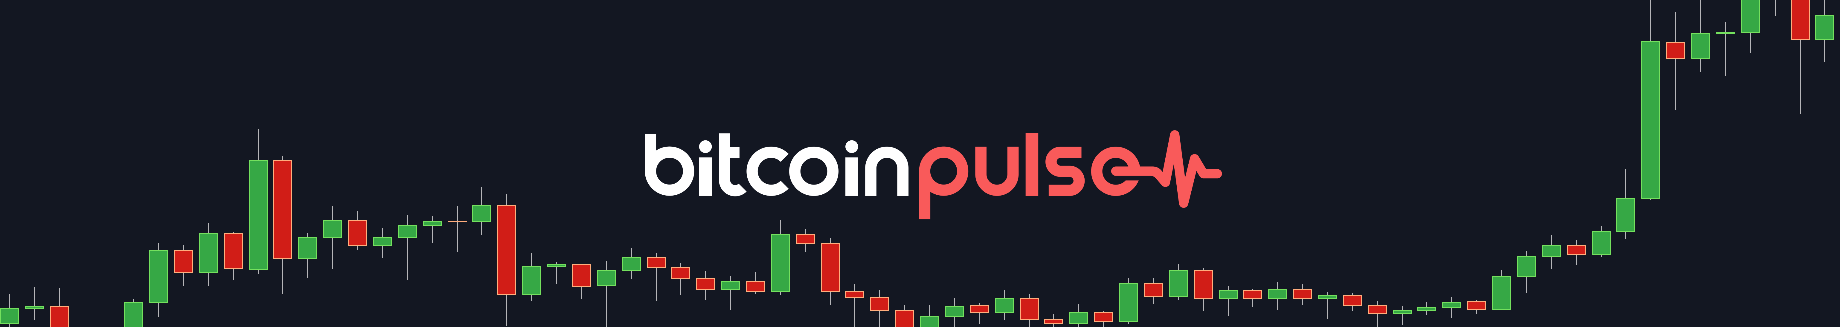 Will the Breakout Continue? - Bitcoin Pulse #85